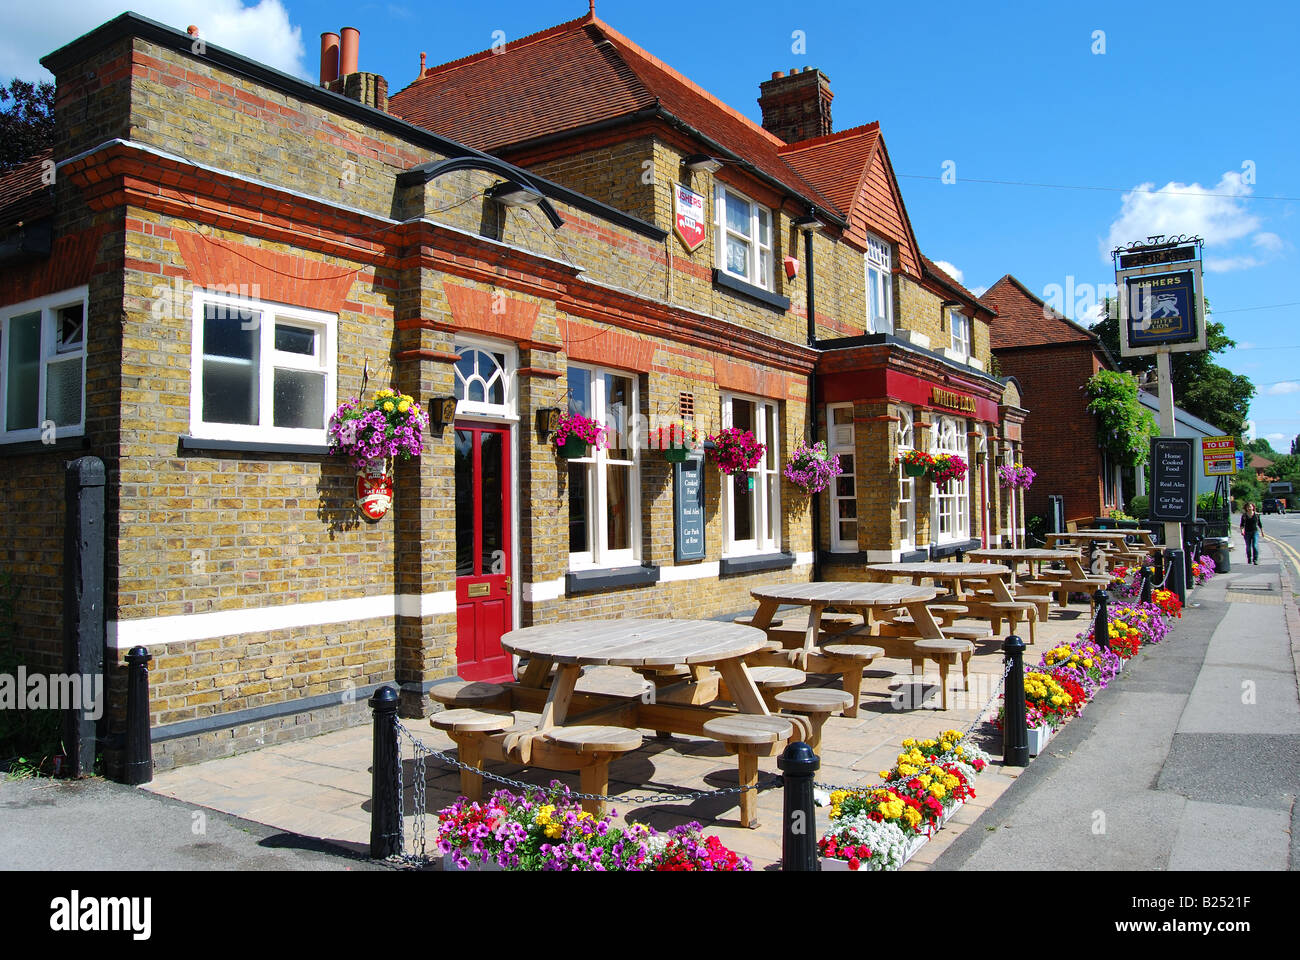 The White Lion Pub, High Street, Egham, Surrey, England, United Kingdom Stock Photo